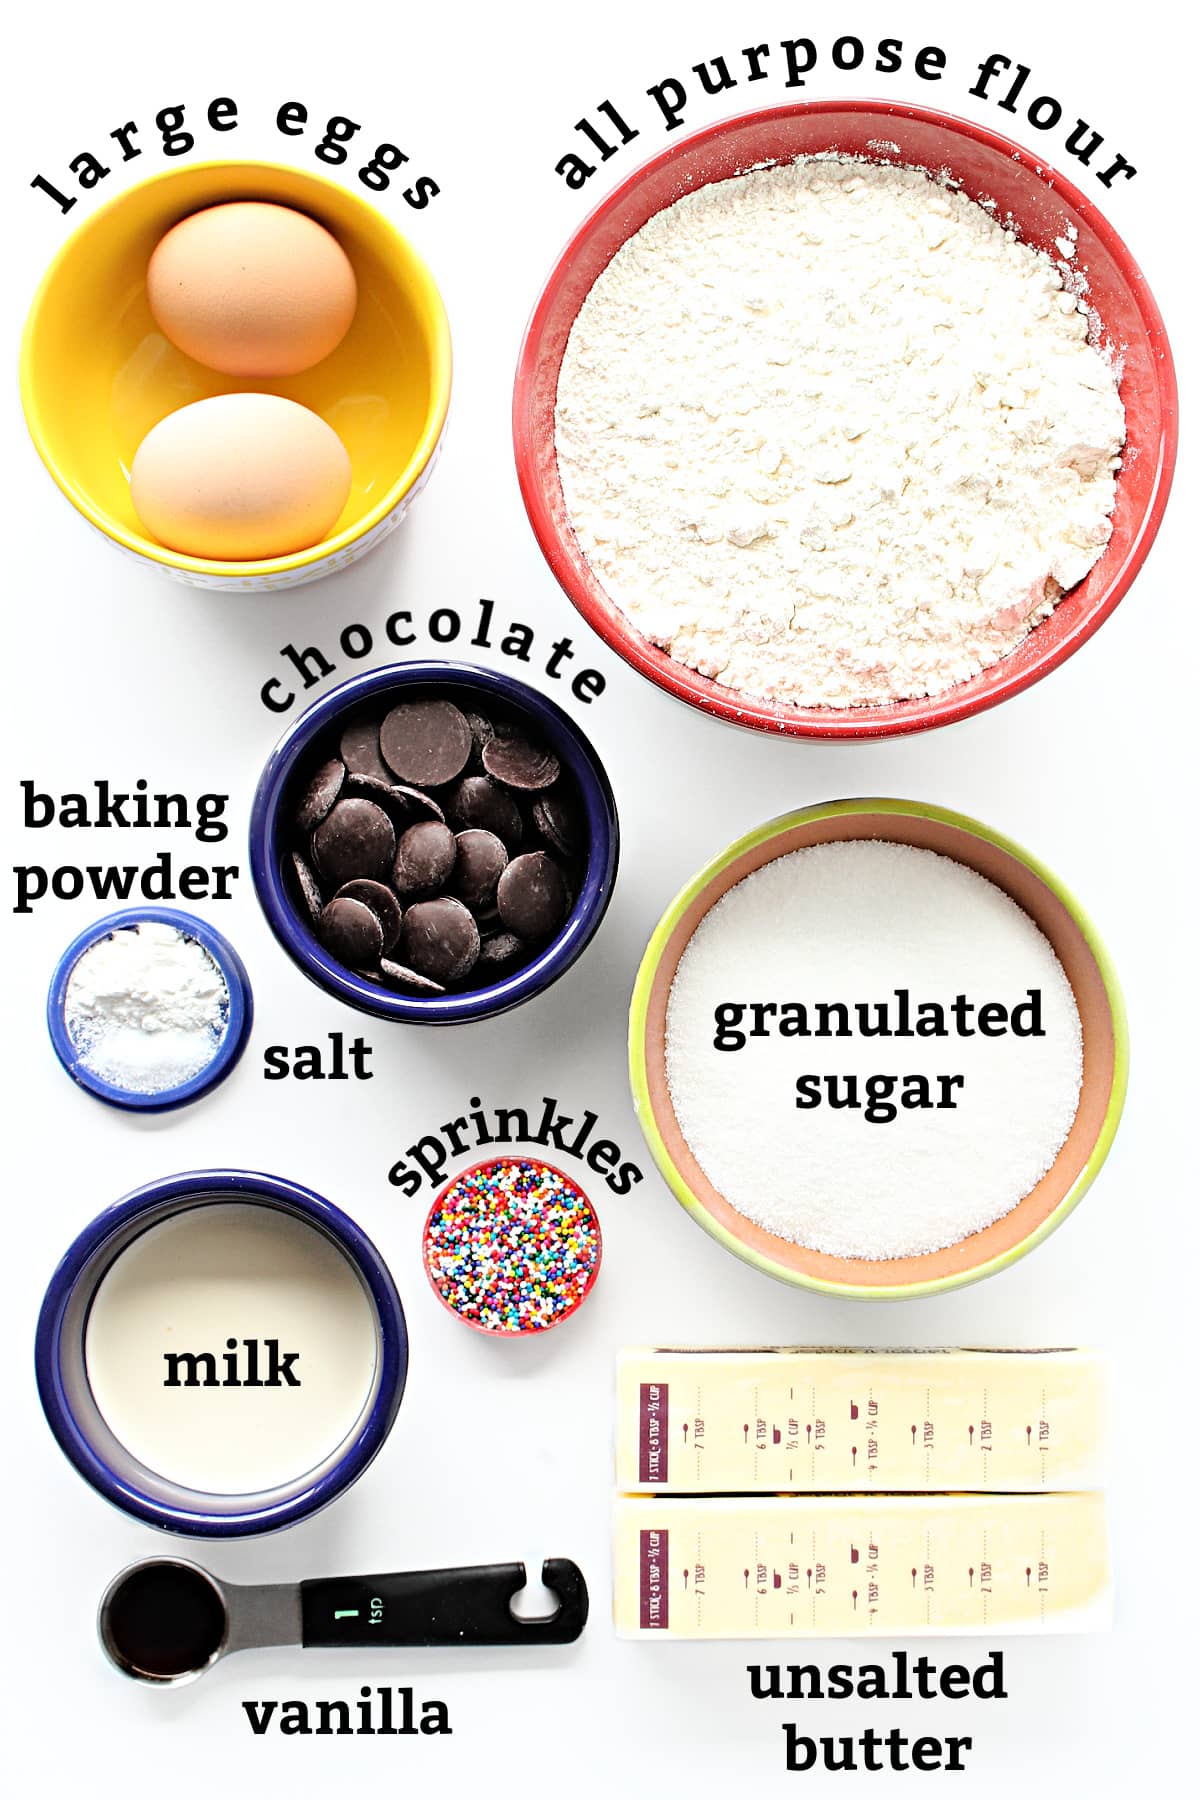 Ingredients with text labels: eggs, flour, baking powder, salt, chocolate, milk, sprinkles, sugar, butter, vanilla.